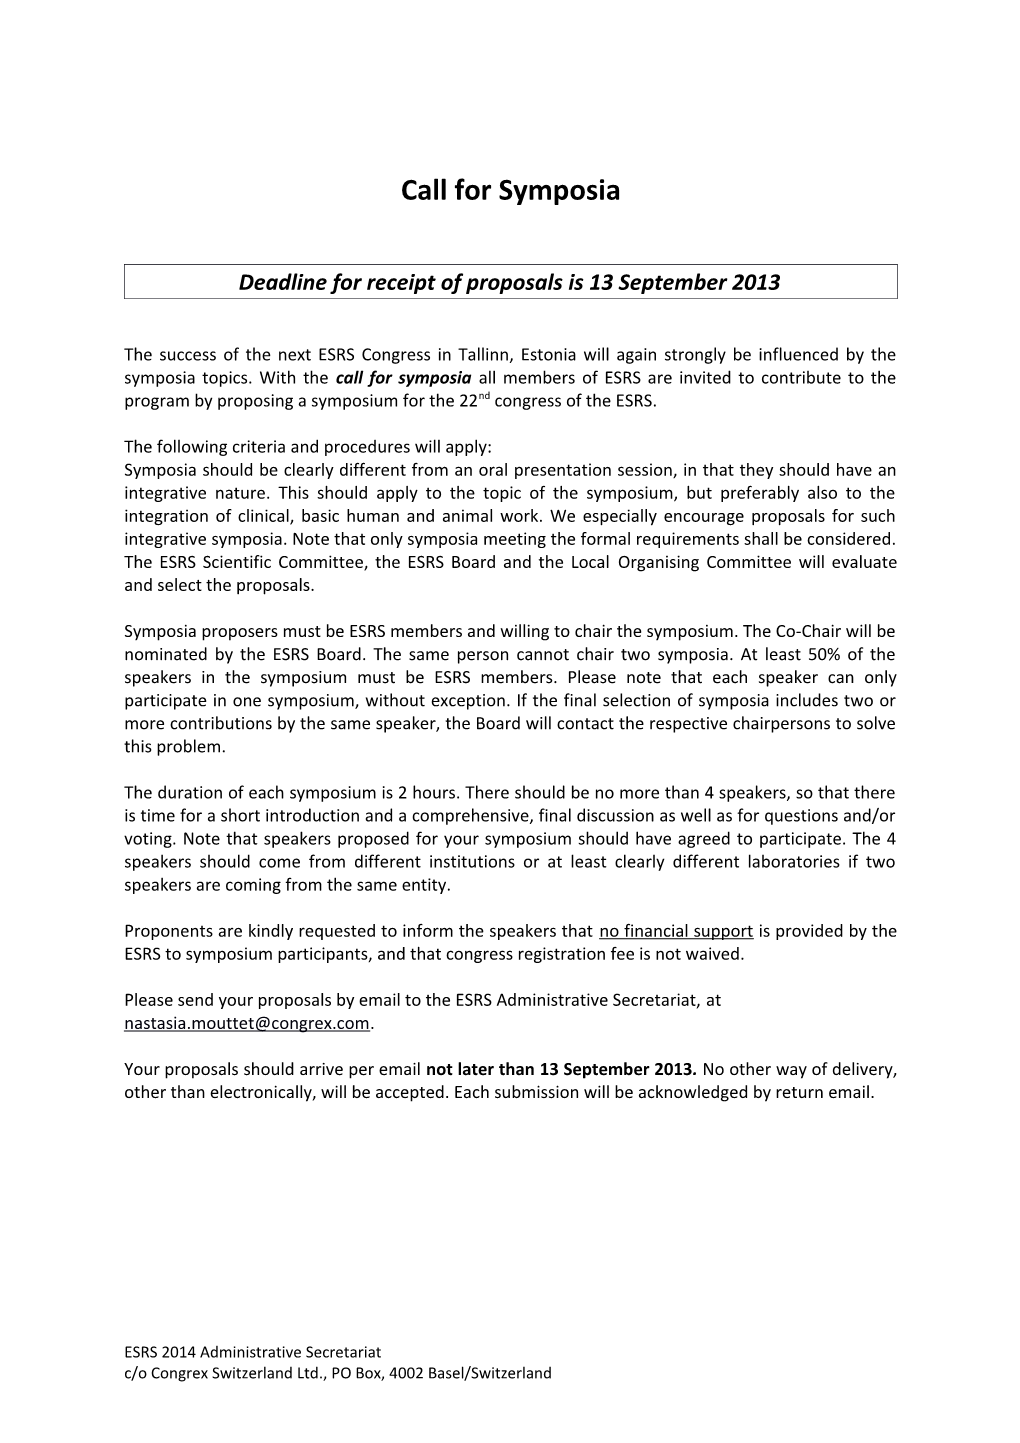 Deadline for Receipt of Proposals Is 13 September 2013